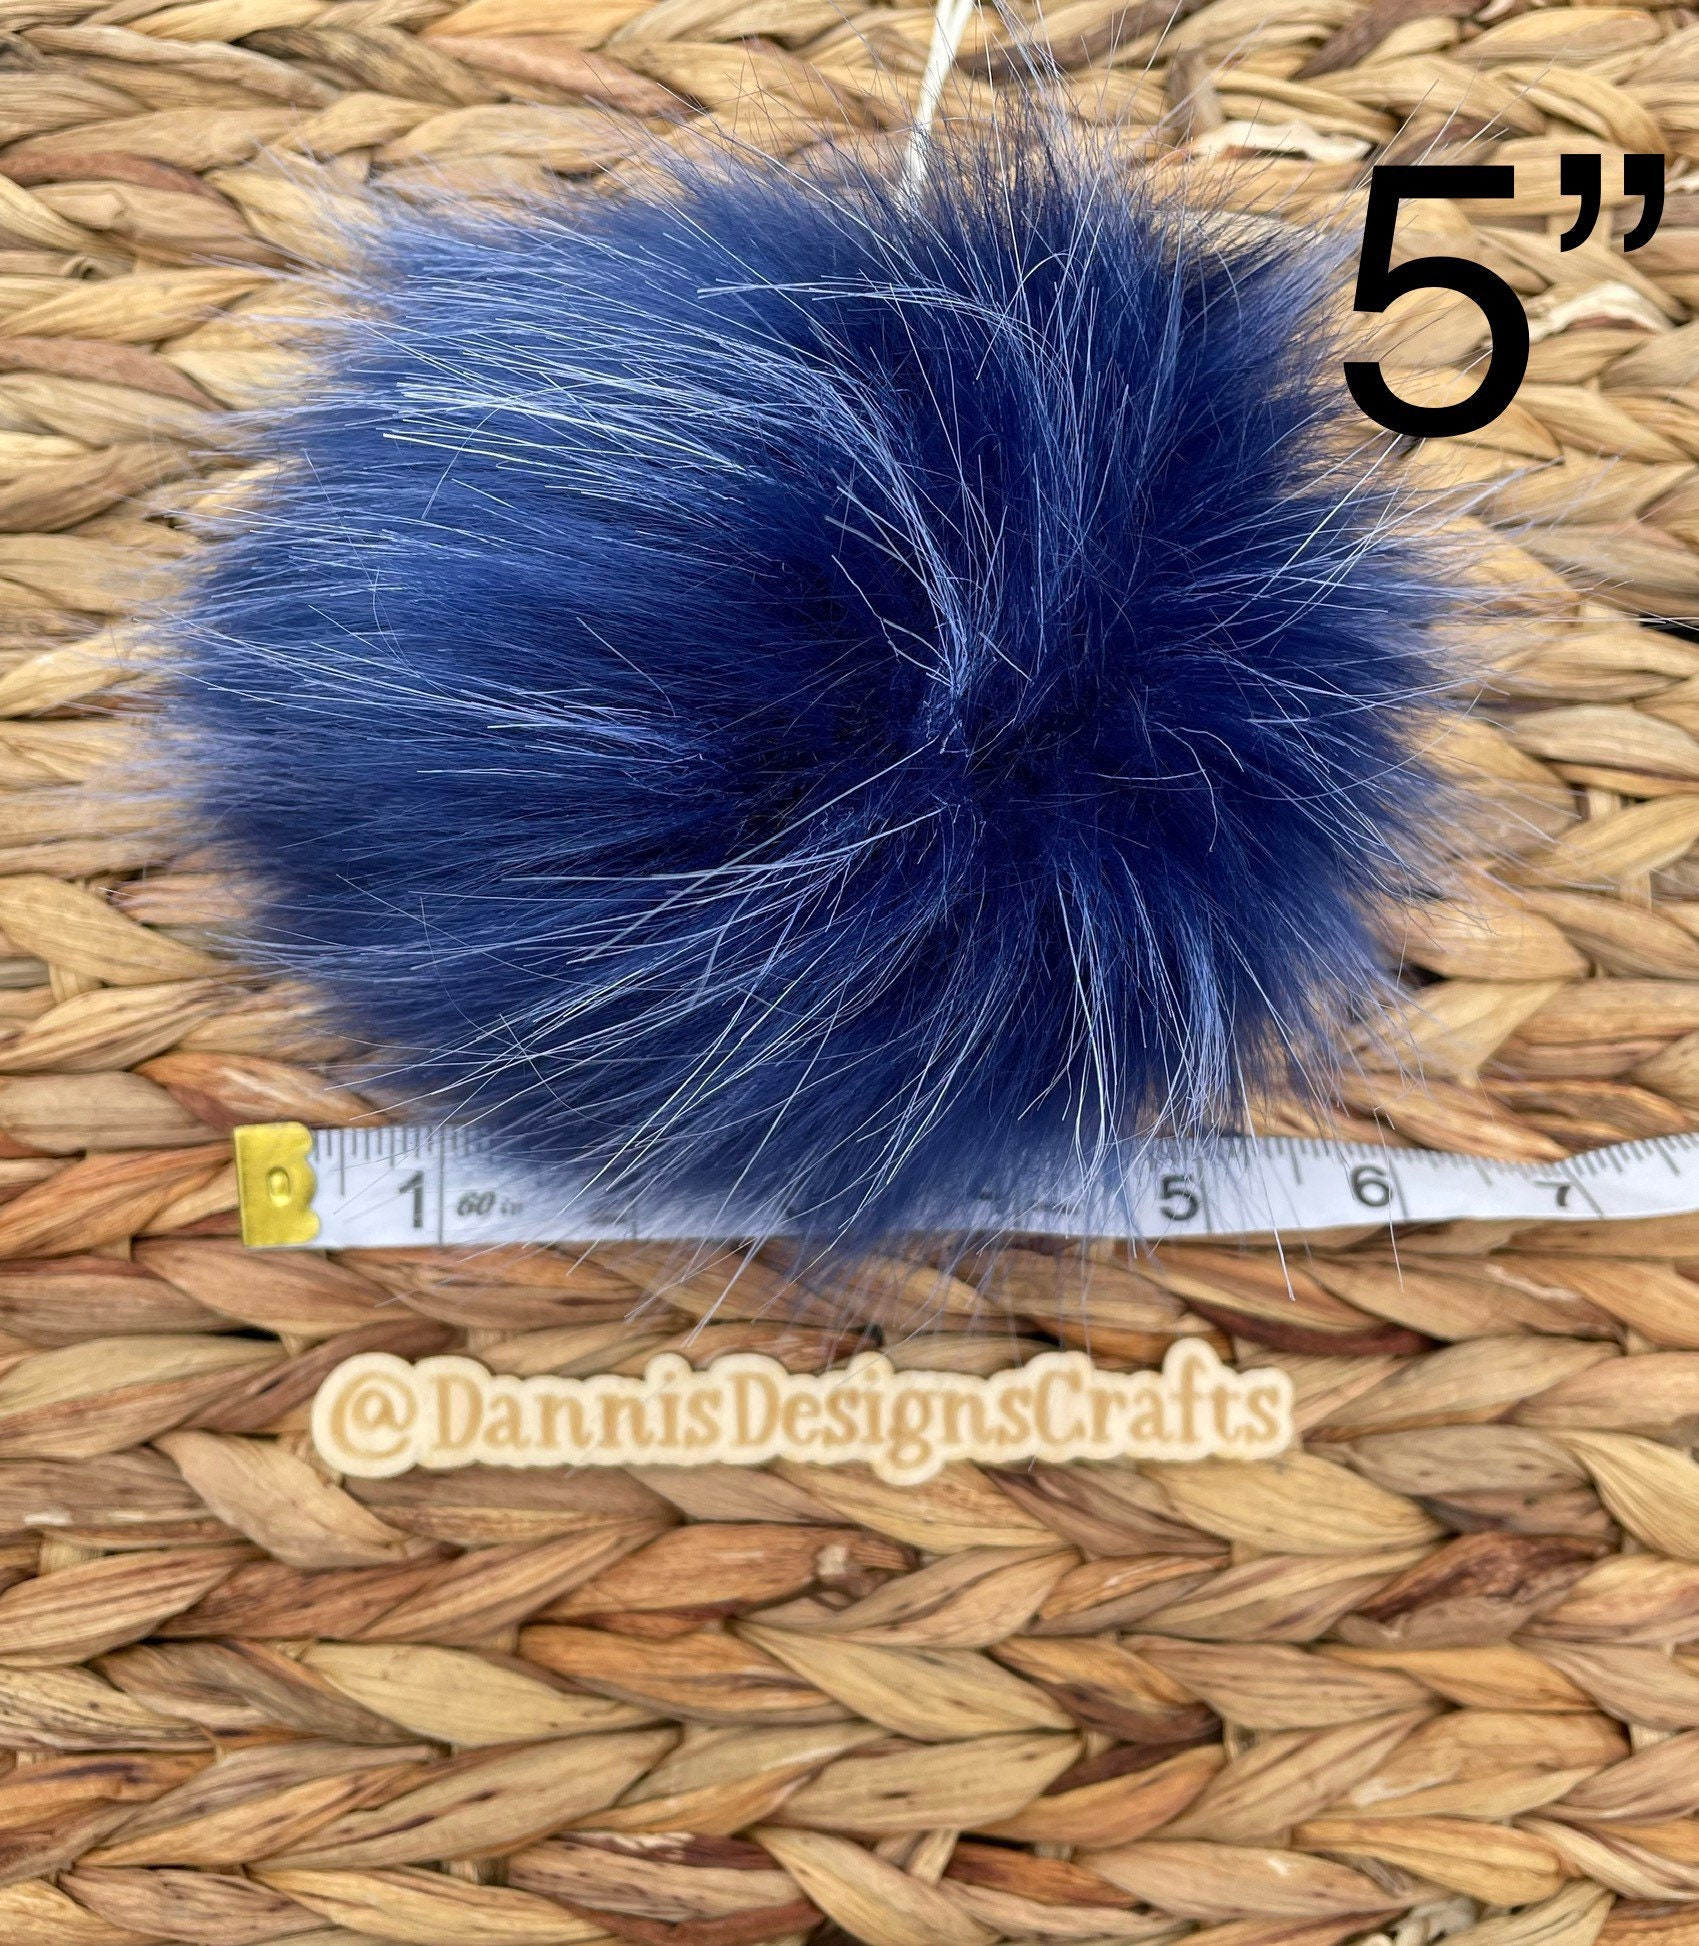 GLACIER Blue Faux Fur Pom Pom – GypsyDreamerCrochet